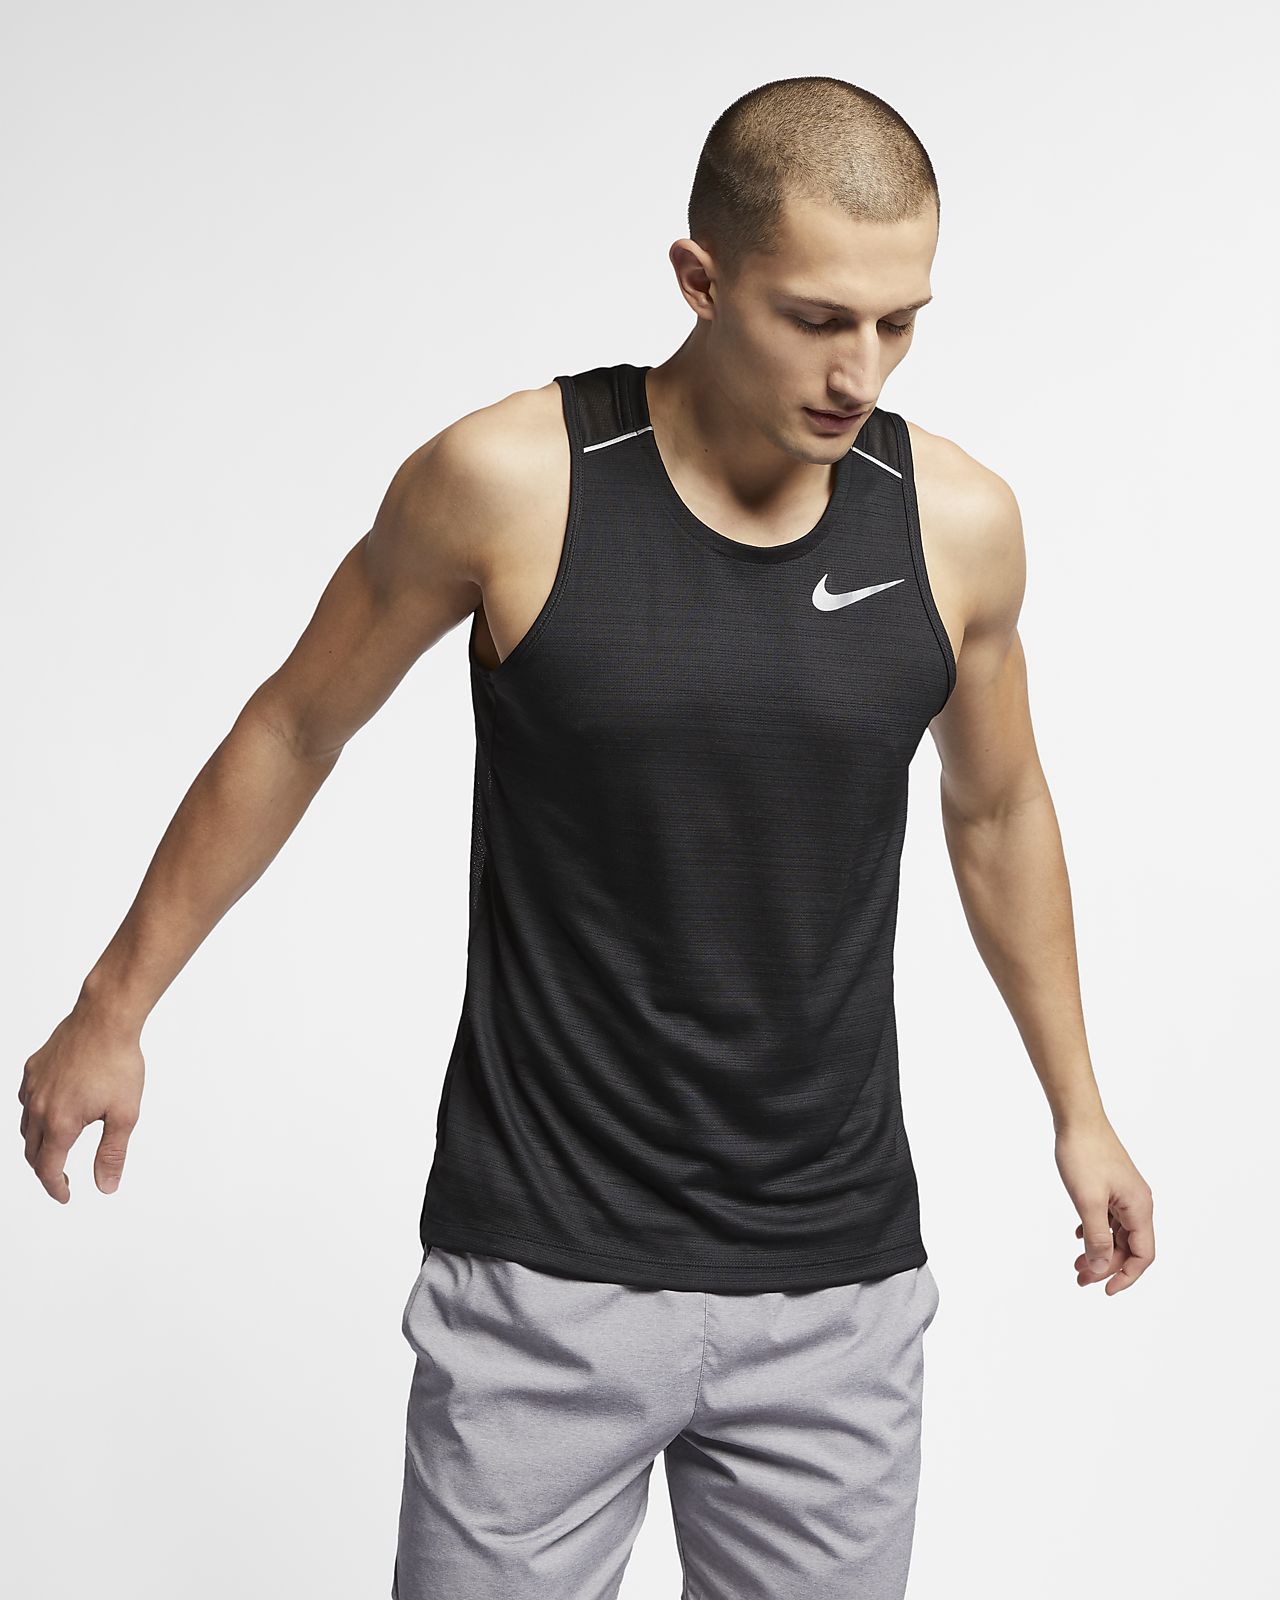 Nike Dri Fit Running Vest Mens Shop Clothing Shoes Online